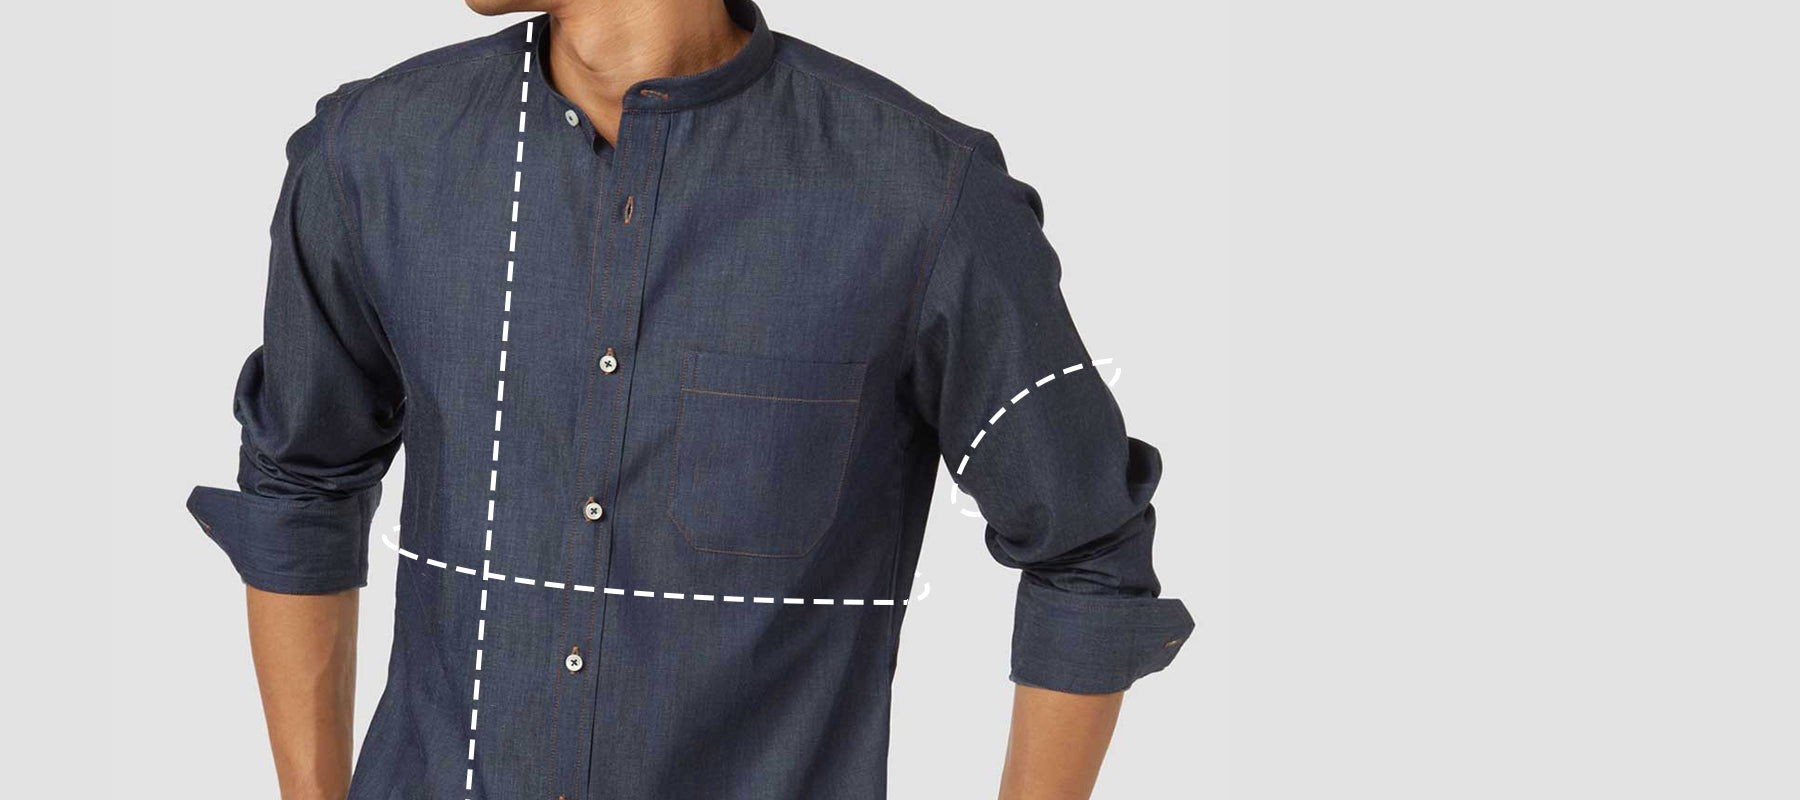 Men's Dress Shirt Cuffs  Proper Size Button And Cuff Proportion